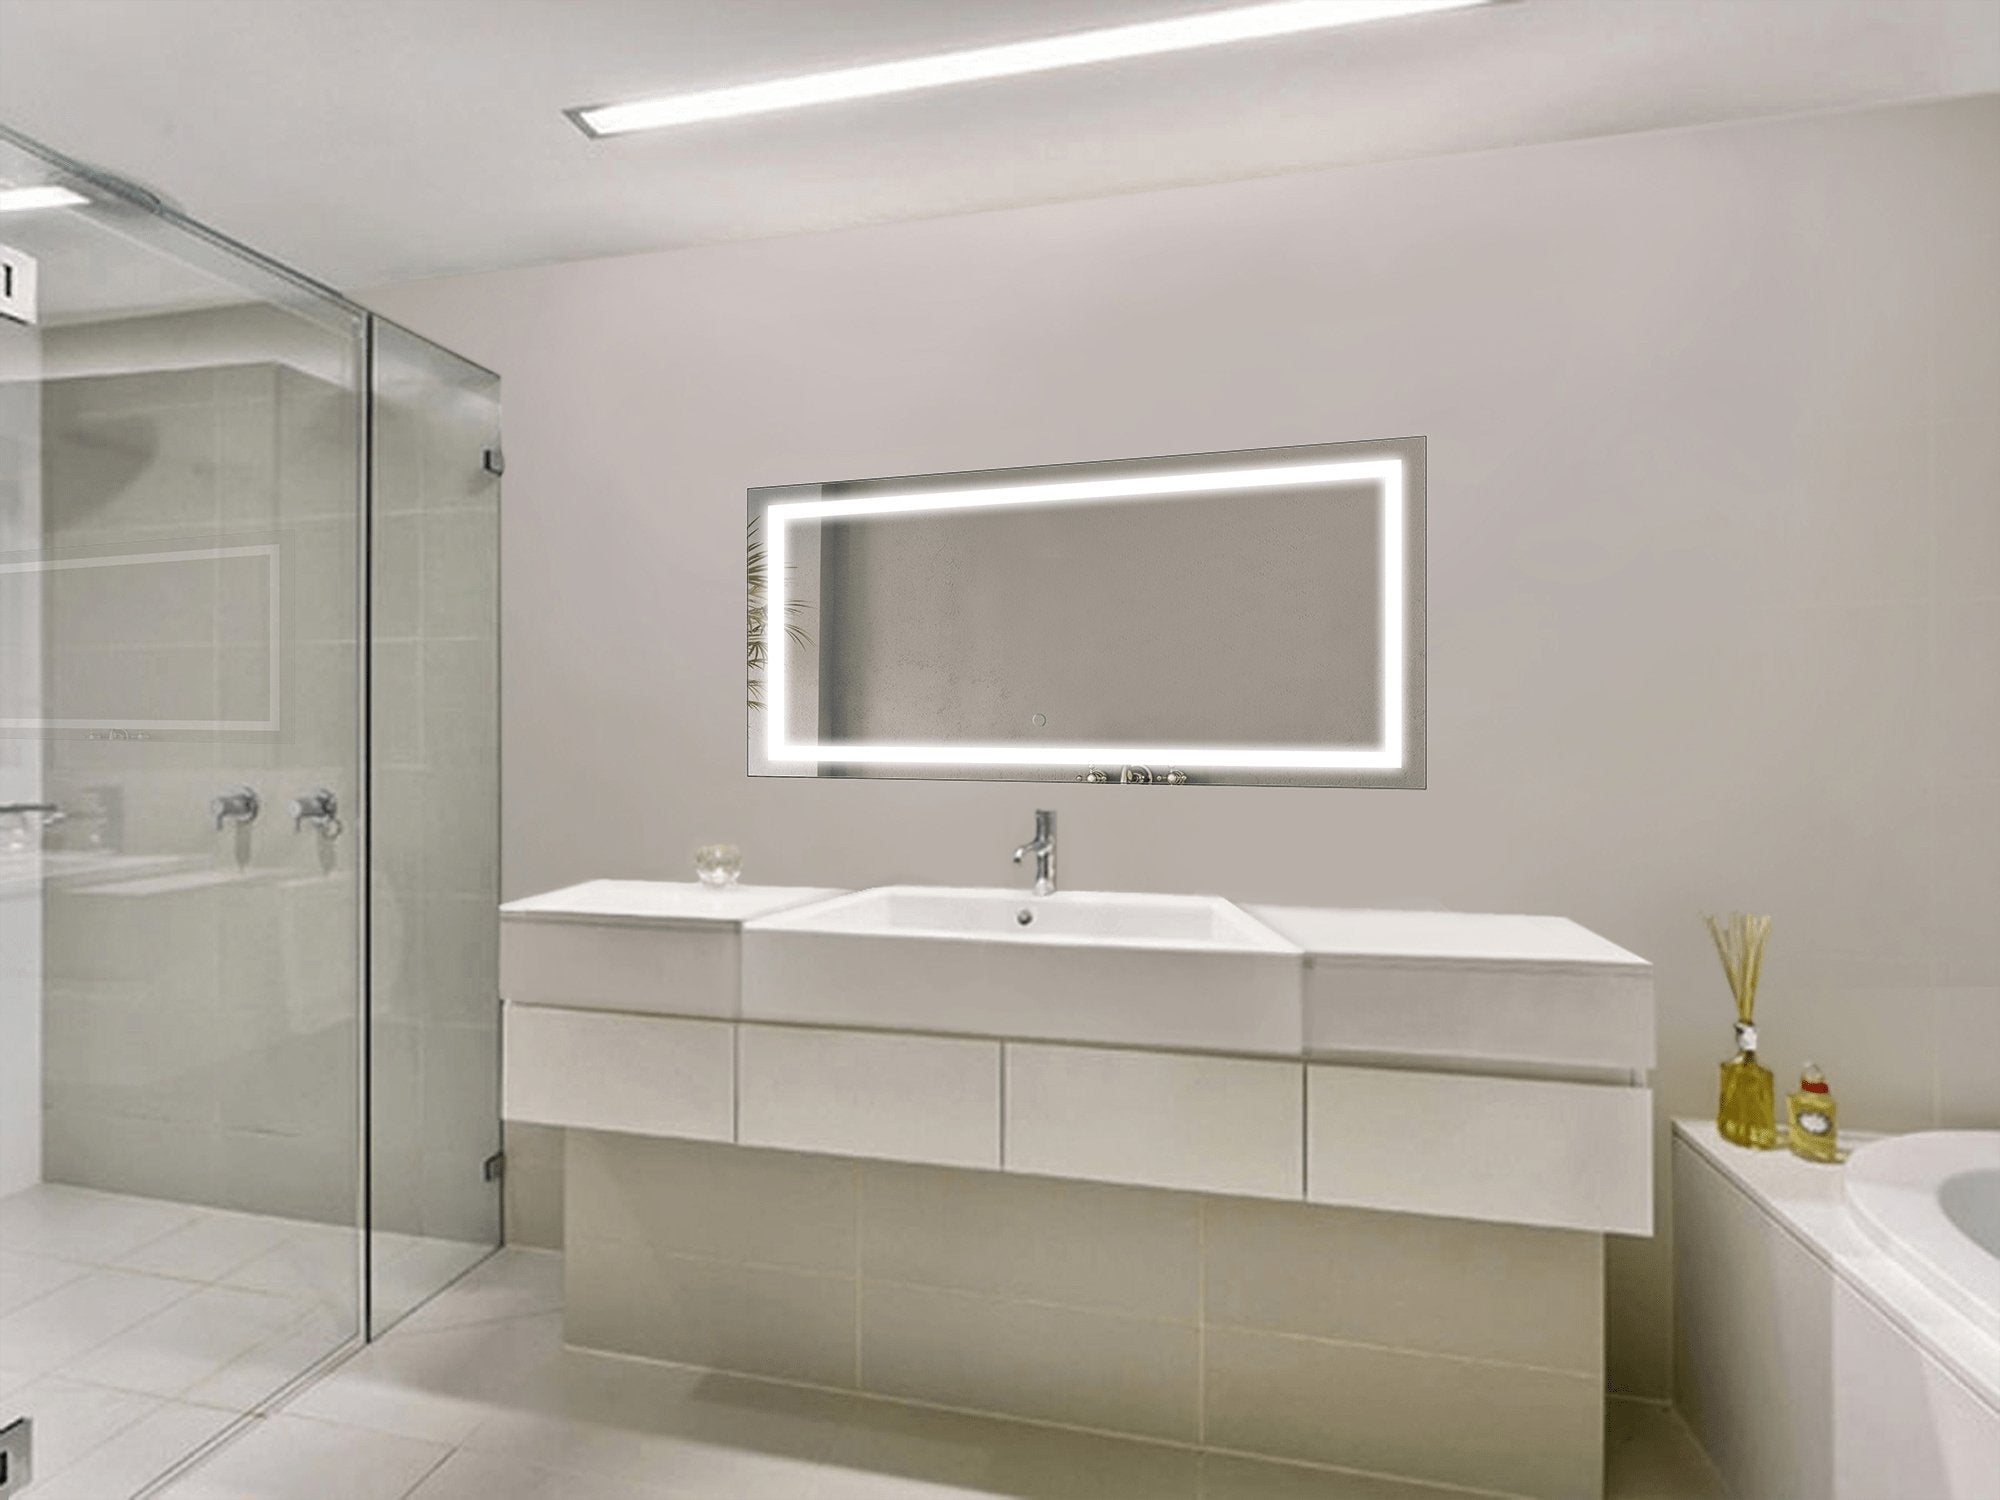 Icon 48" X 24" LED Bathroom Mirror w/ Dimmer & Defogger | Lighted Vanity Mirror - Molaix - Molaix853962007255Lighted Wall Mirror,RectangleICON4824